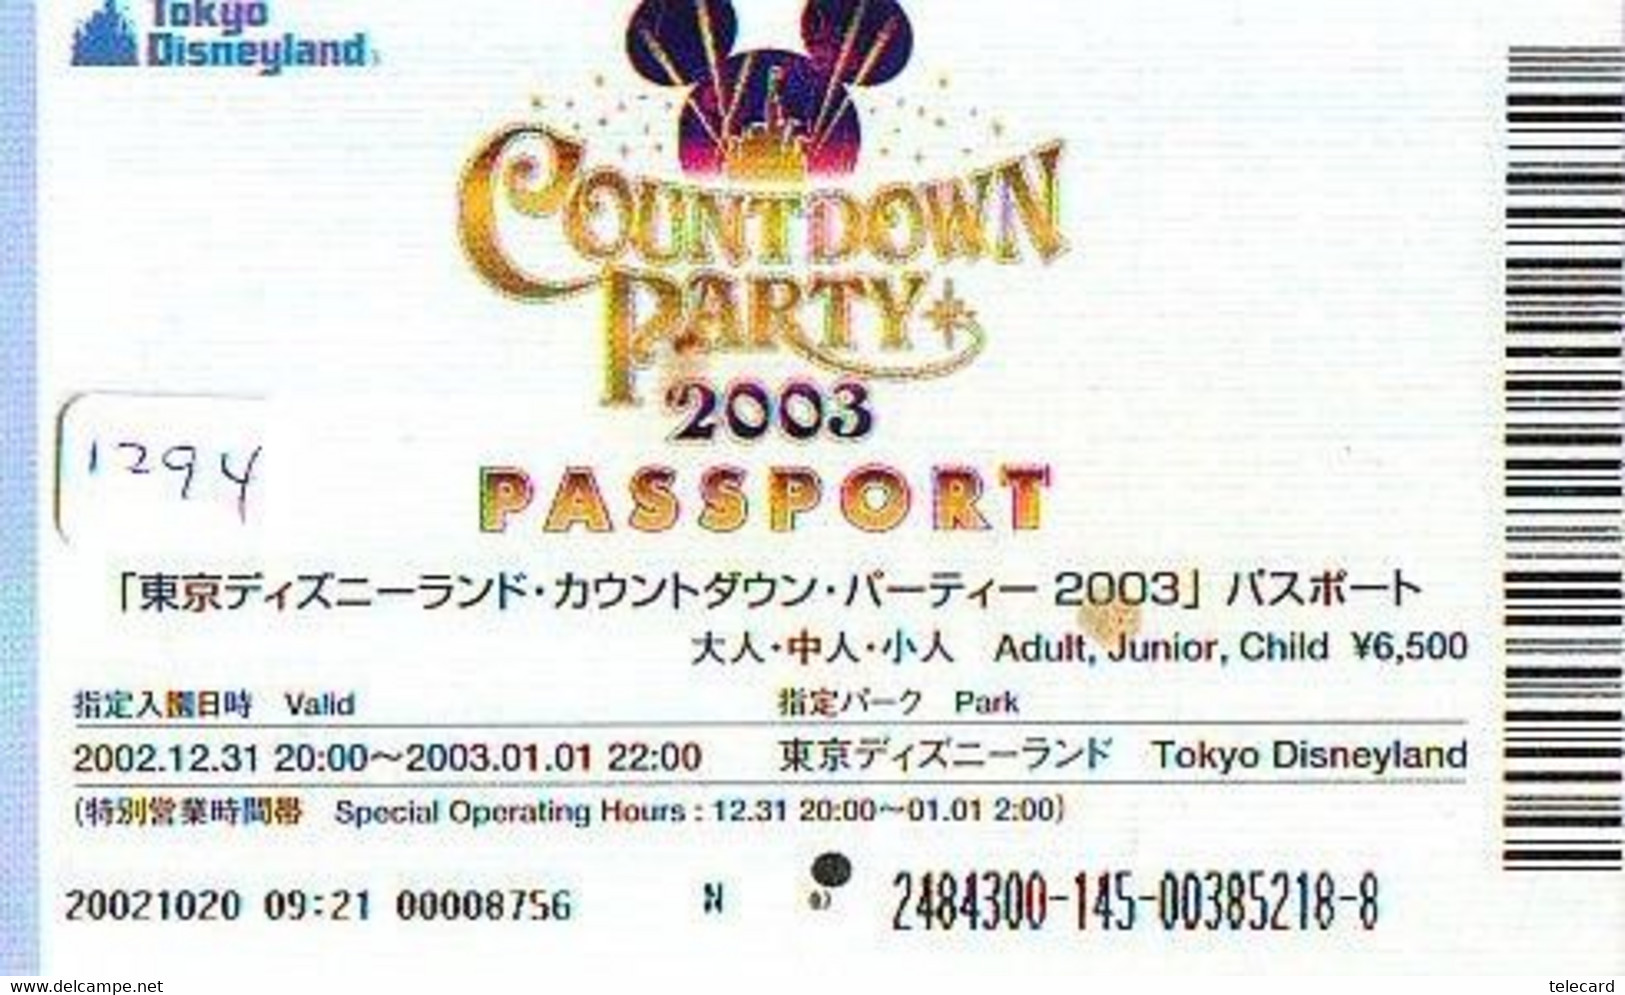 Disney Passeport Entreecard JAPON * TOKYO DISNEYLAND Passport (1294) JAPAN *  PASSPORT - Disney